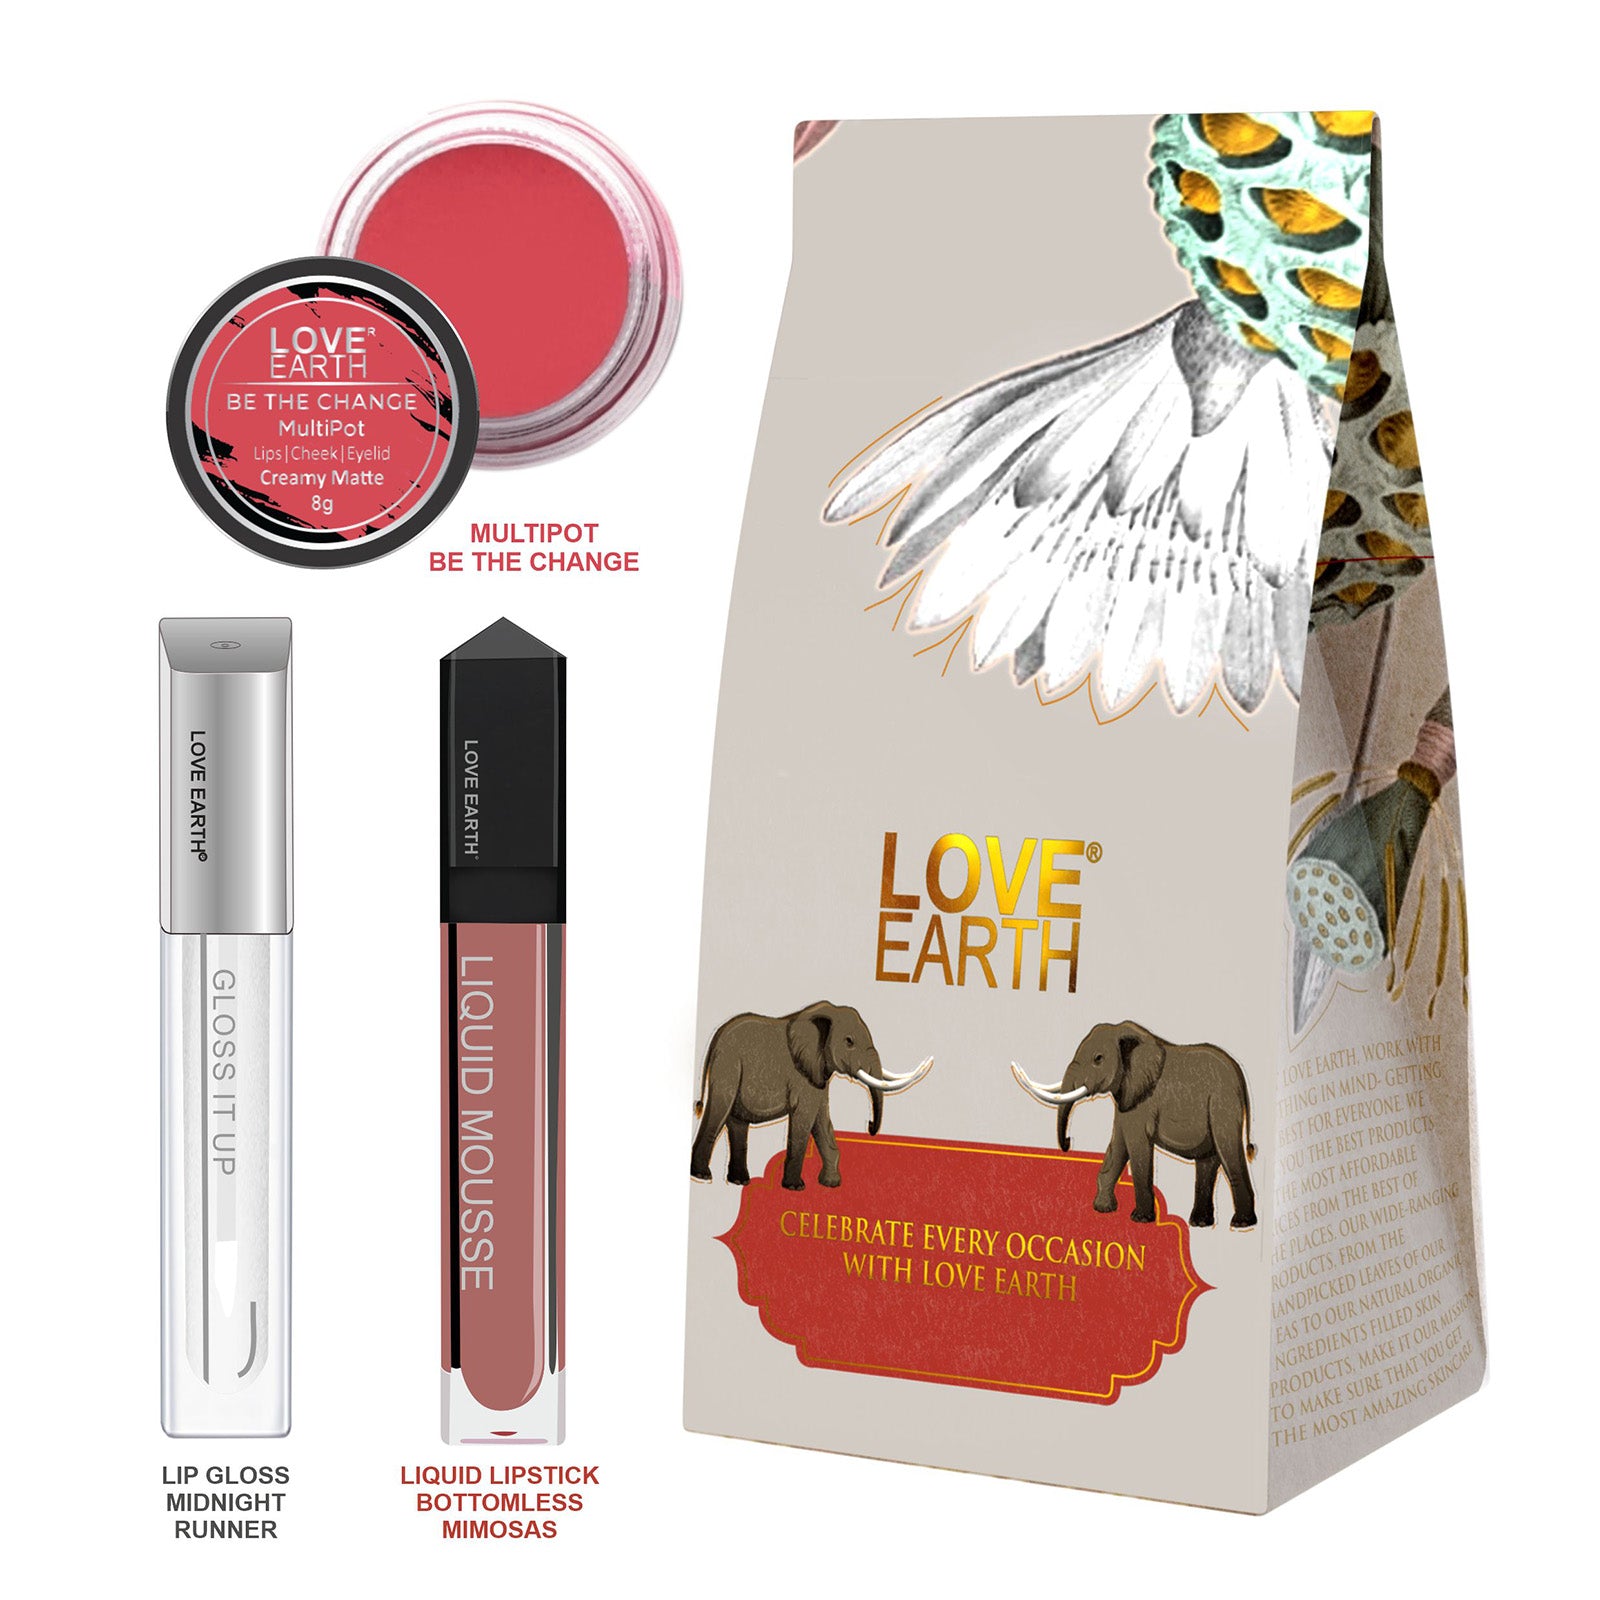 Lip And Cheek Tint Be The Change, Liquid Lipstick Bottomless Mimosas & Lip Gloss Midnight Runner Gift Pack